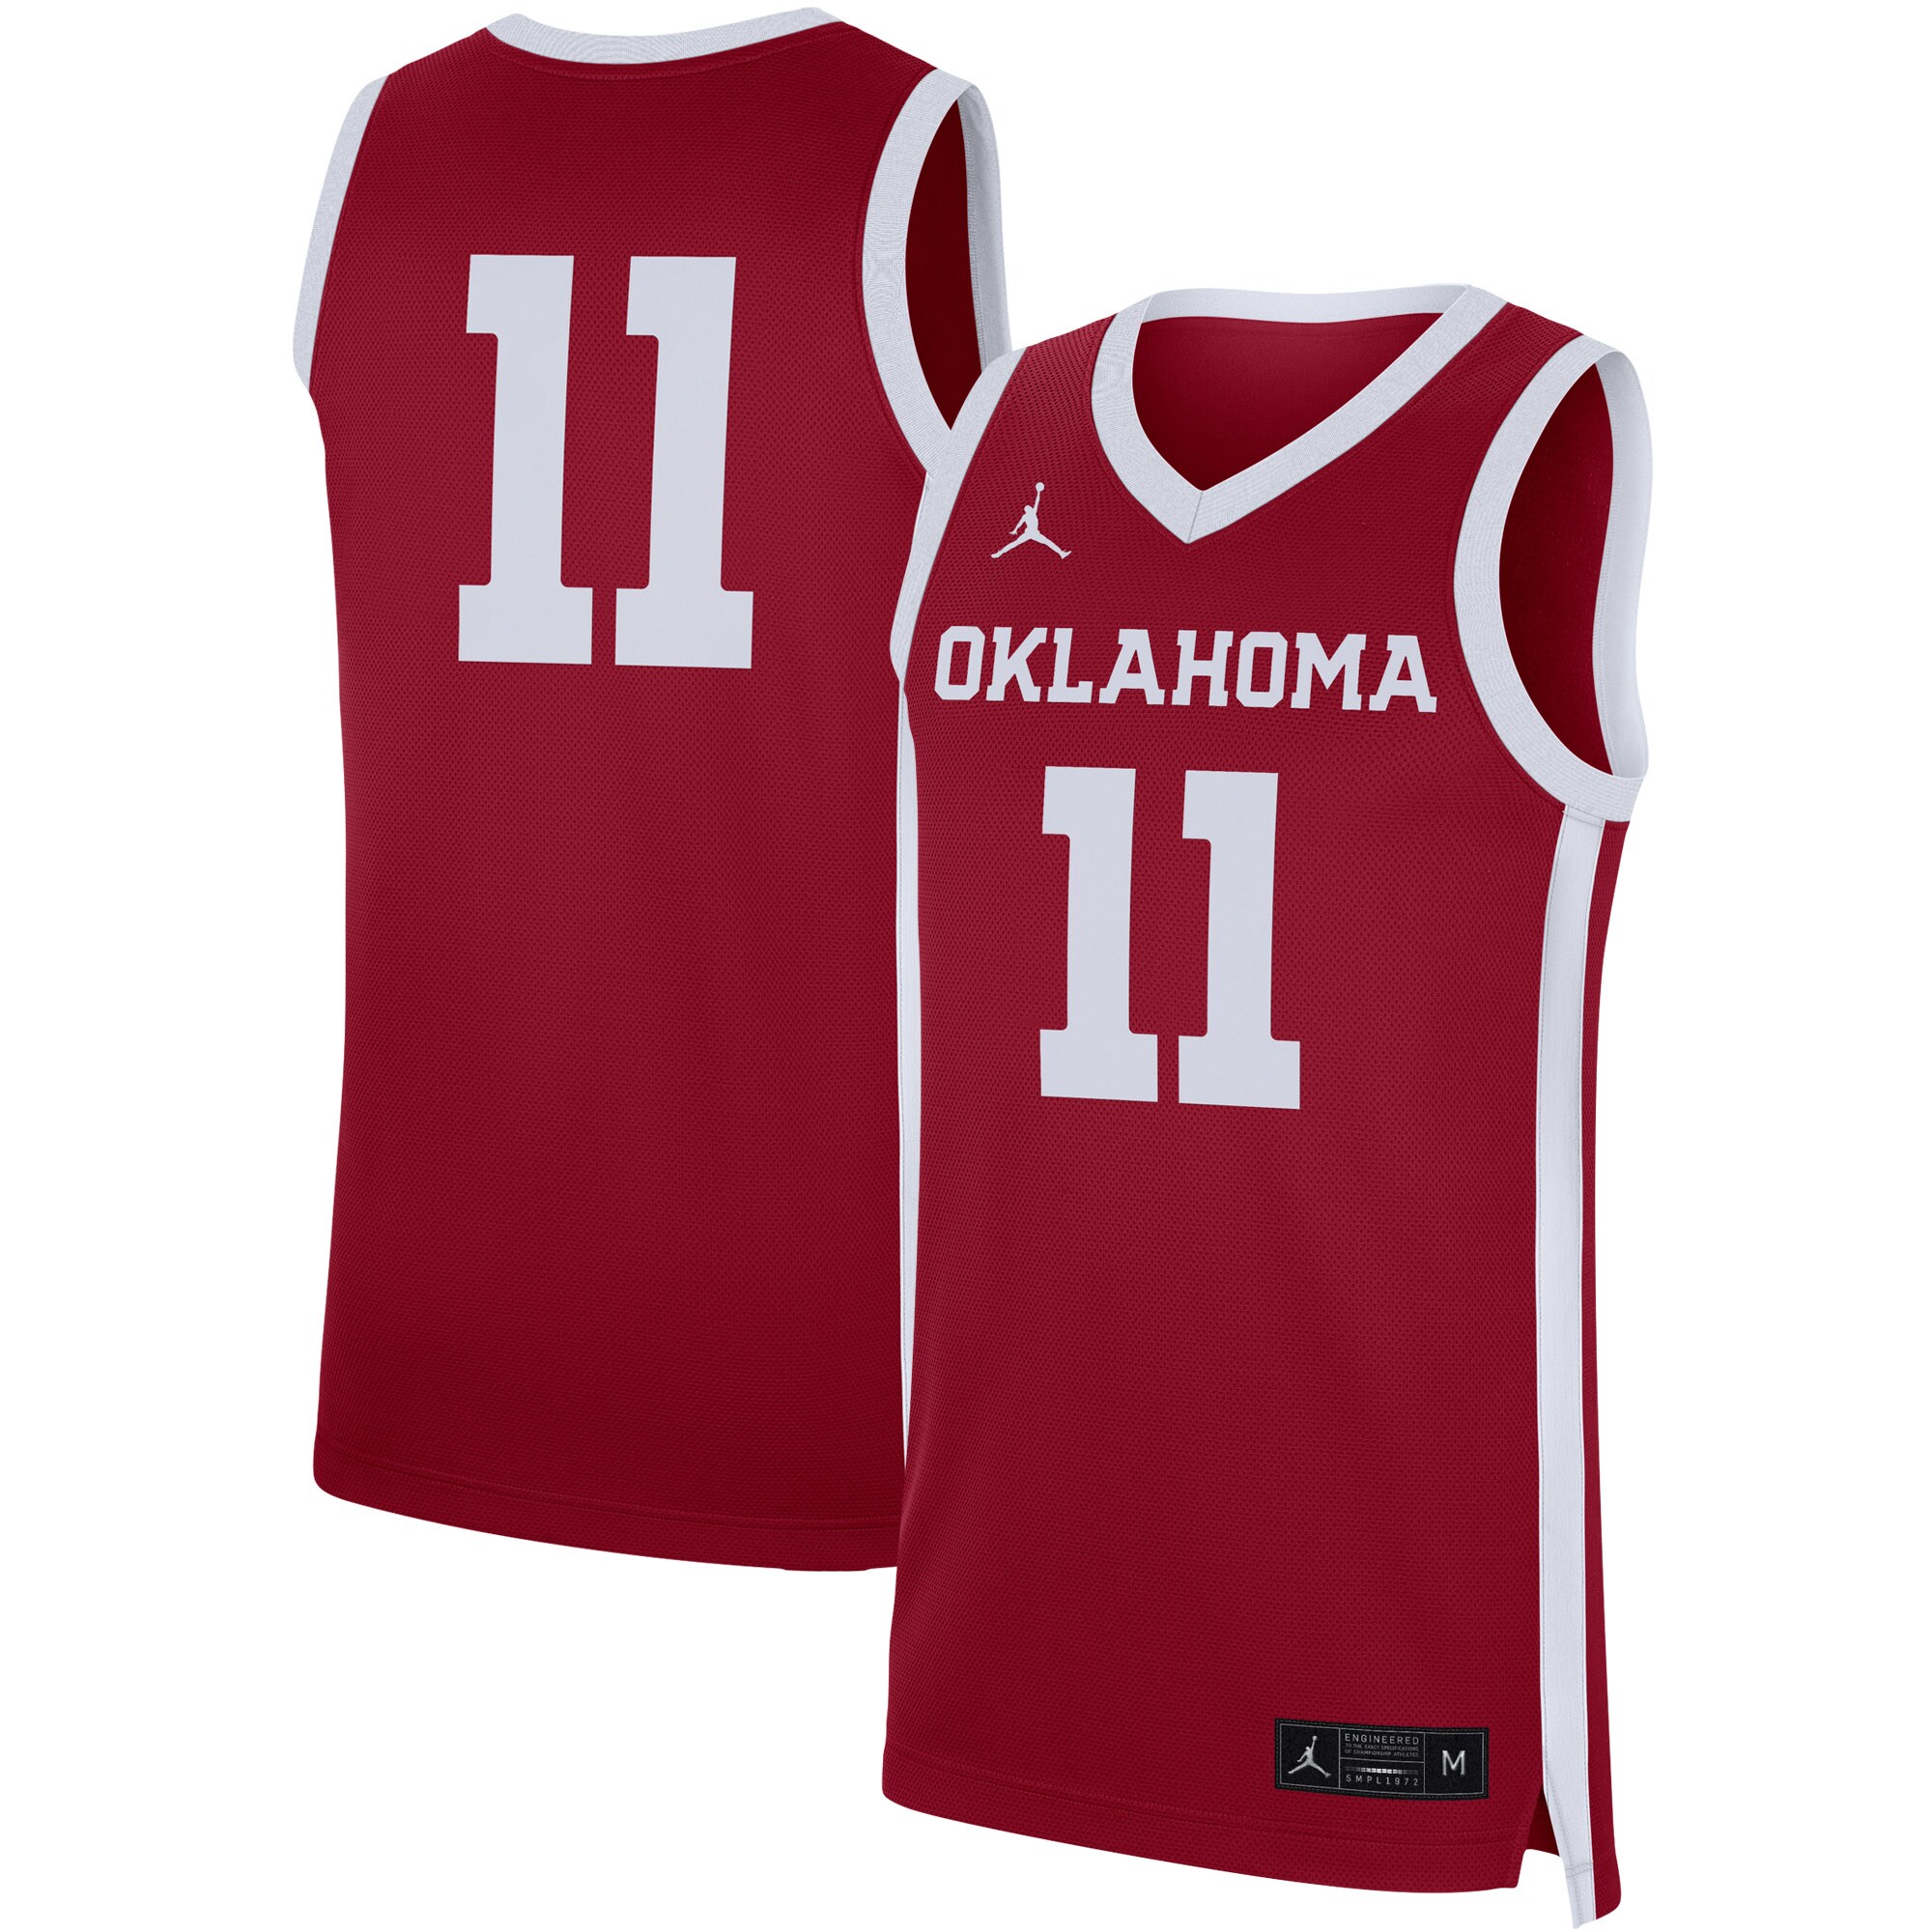 Oklahoma Sooners Jordan Brand Replica Jersey - Crimson For Youth Women Men